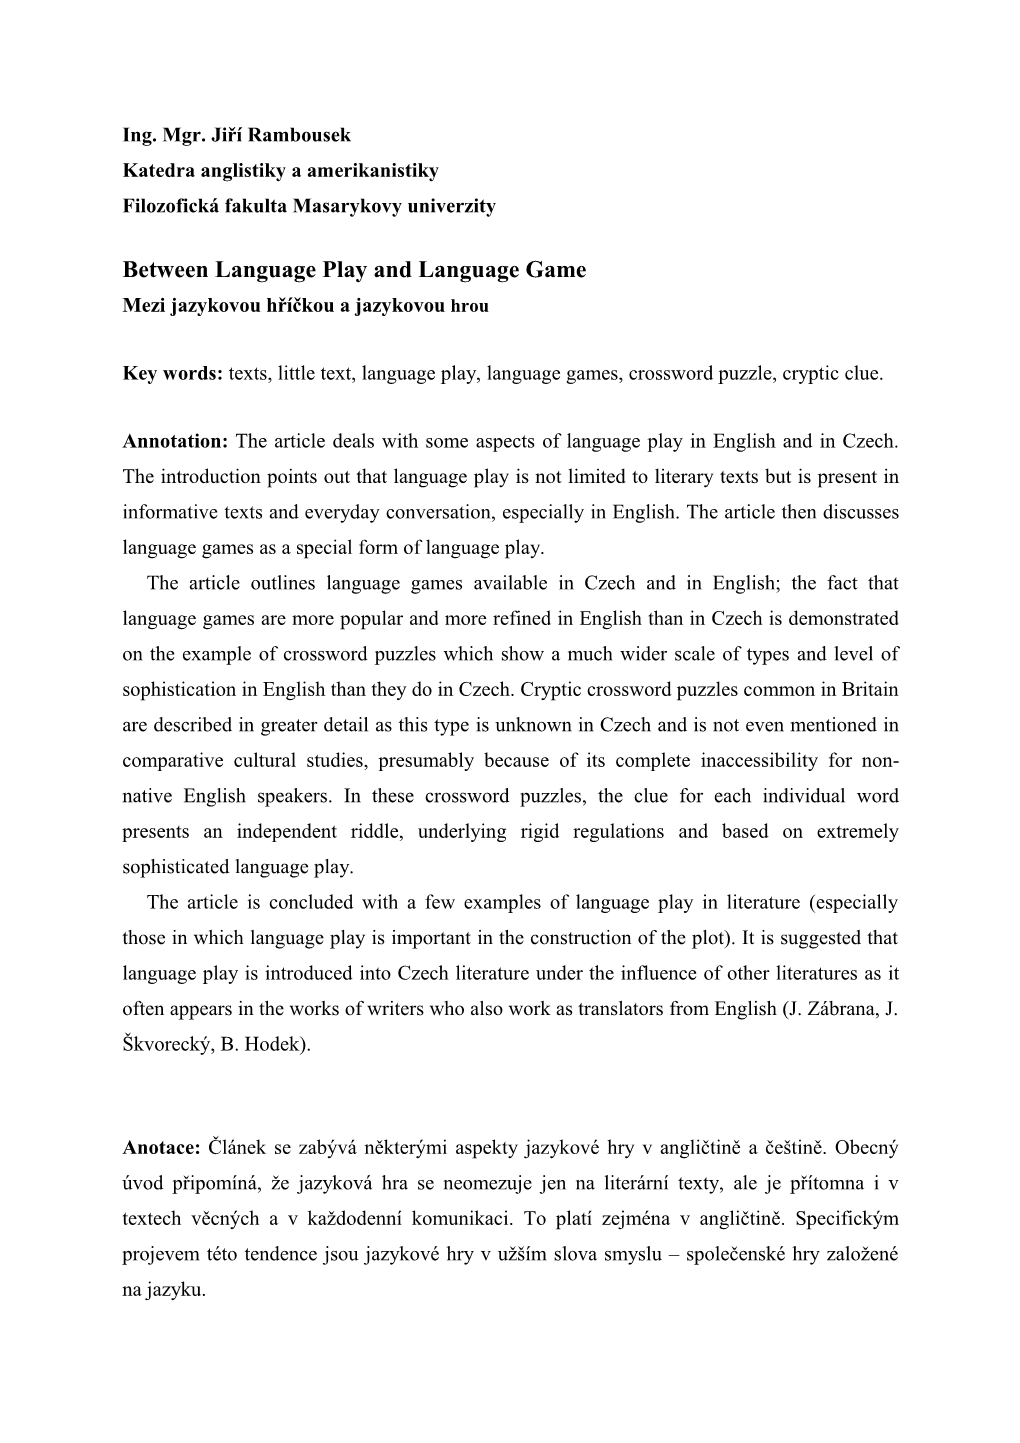 Between Language Play and Language Game